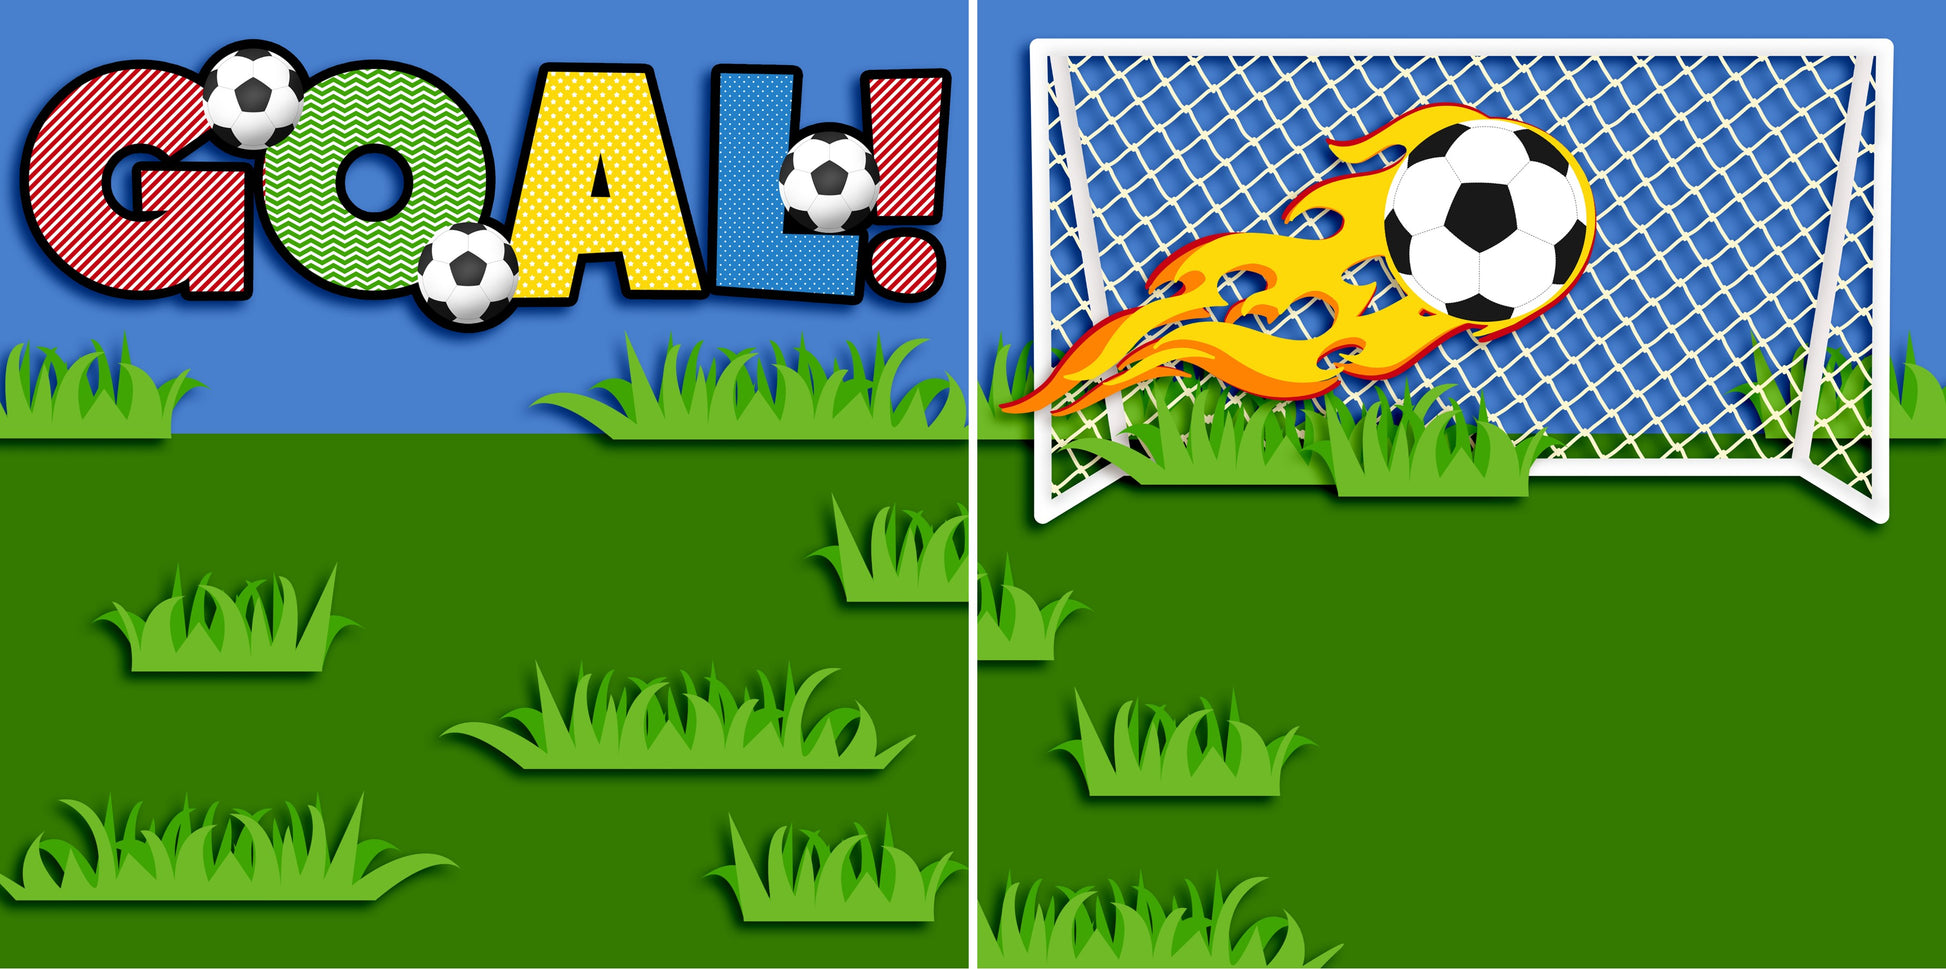 Goal - Soccer NPM - 4915 - EZscrapbooks Scrapbook Layouts soccer, Sports